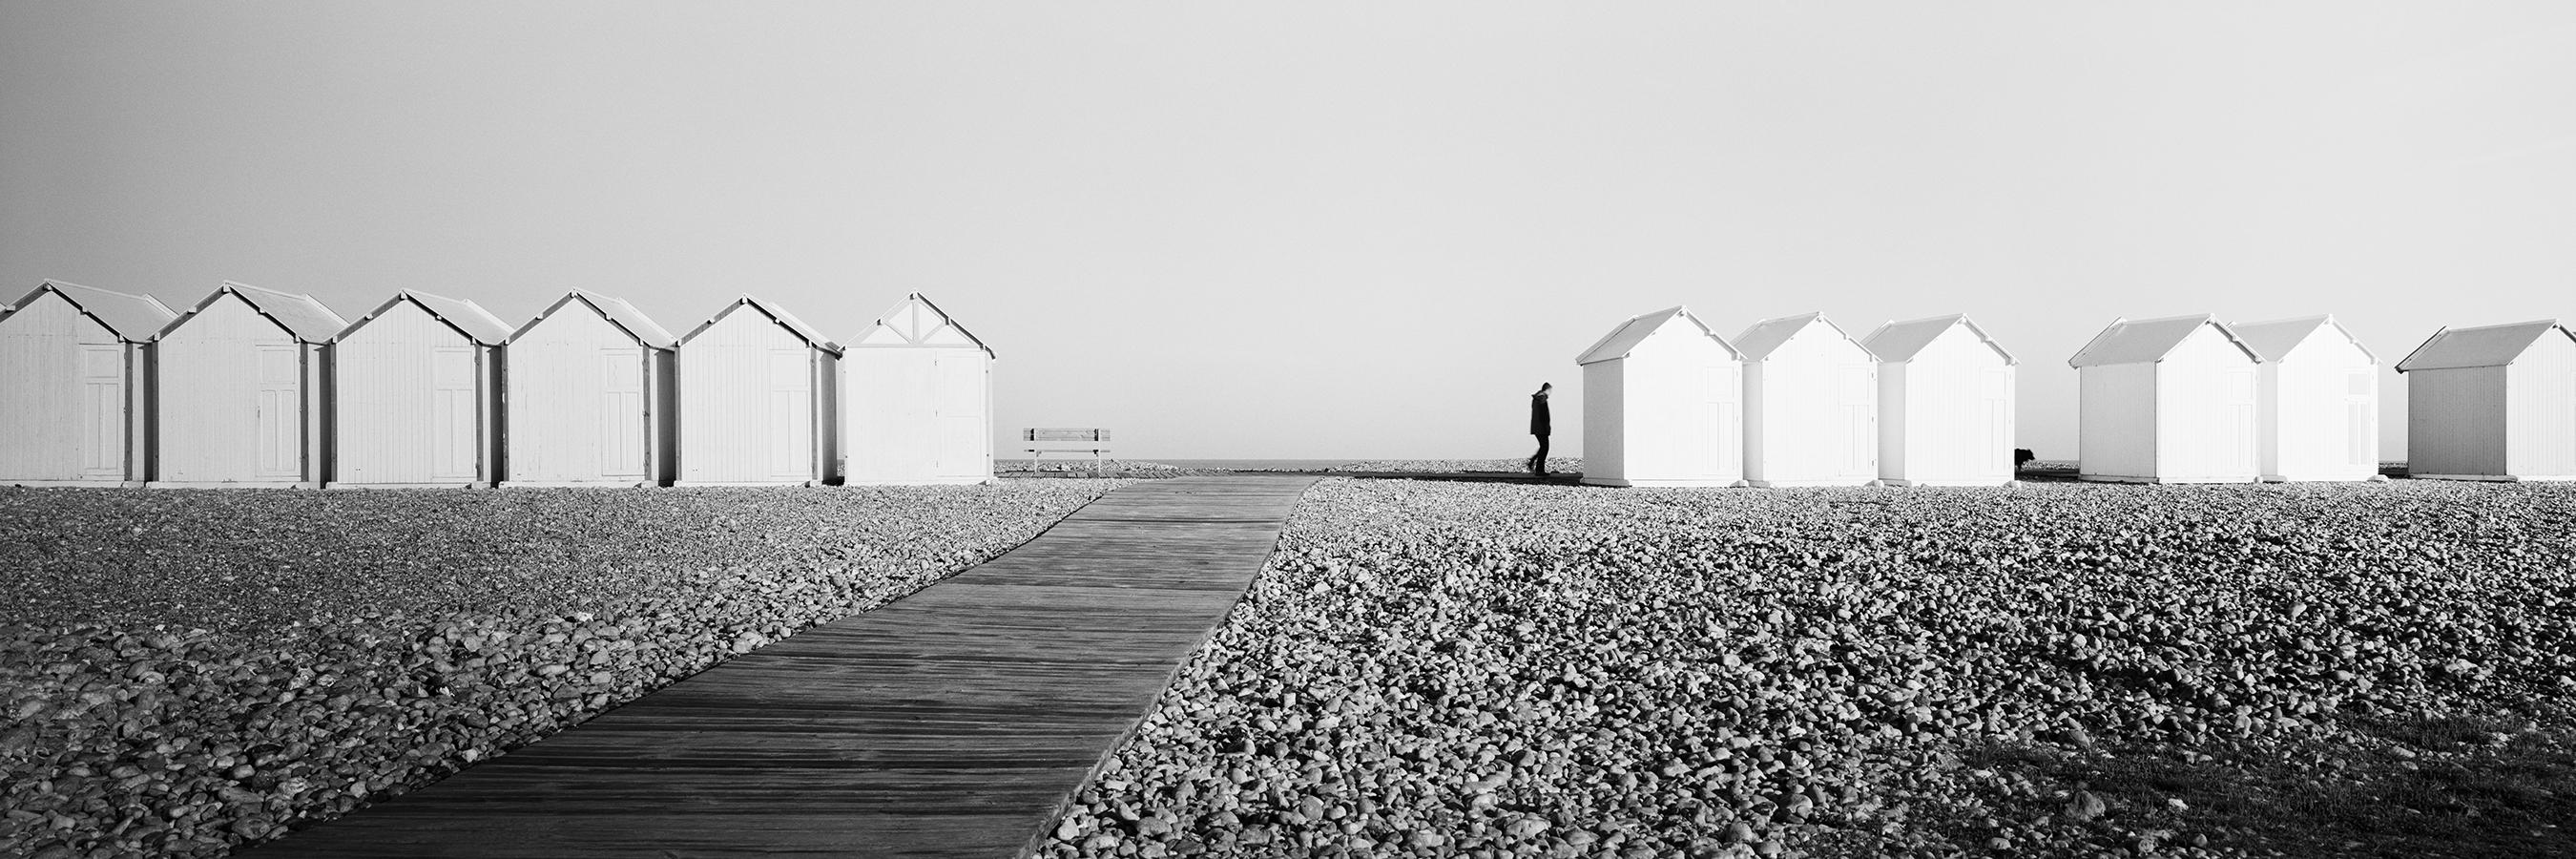 Beach Huts Panorama, rocky beach, black and white fine art photography print